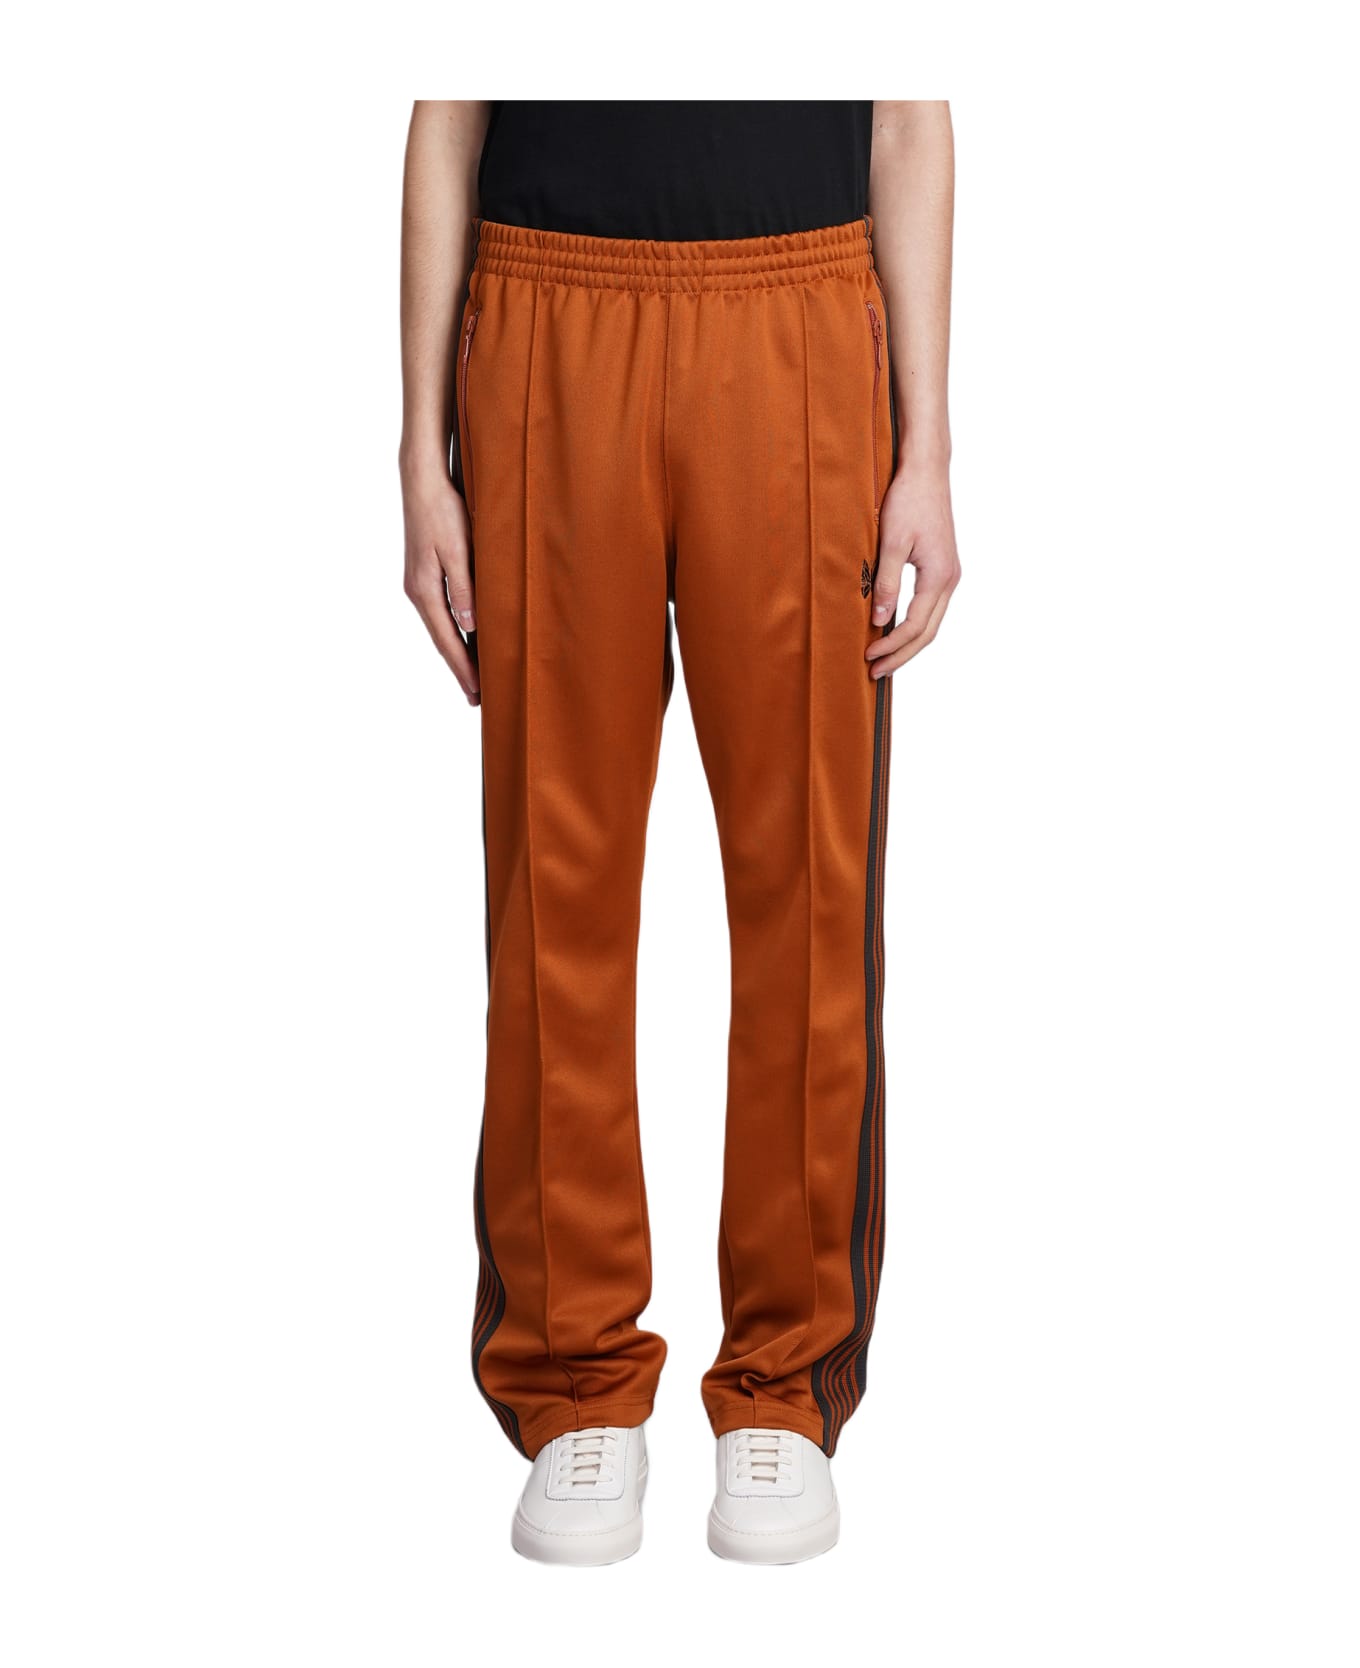 Needles Pants In Brown Polyester - brown